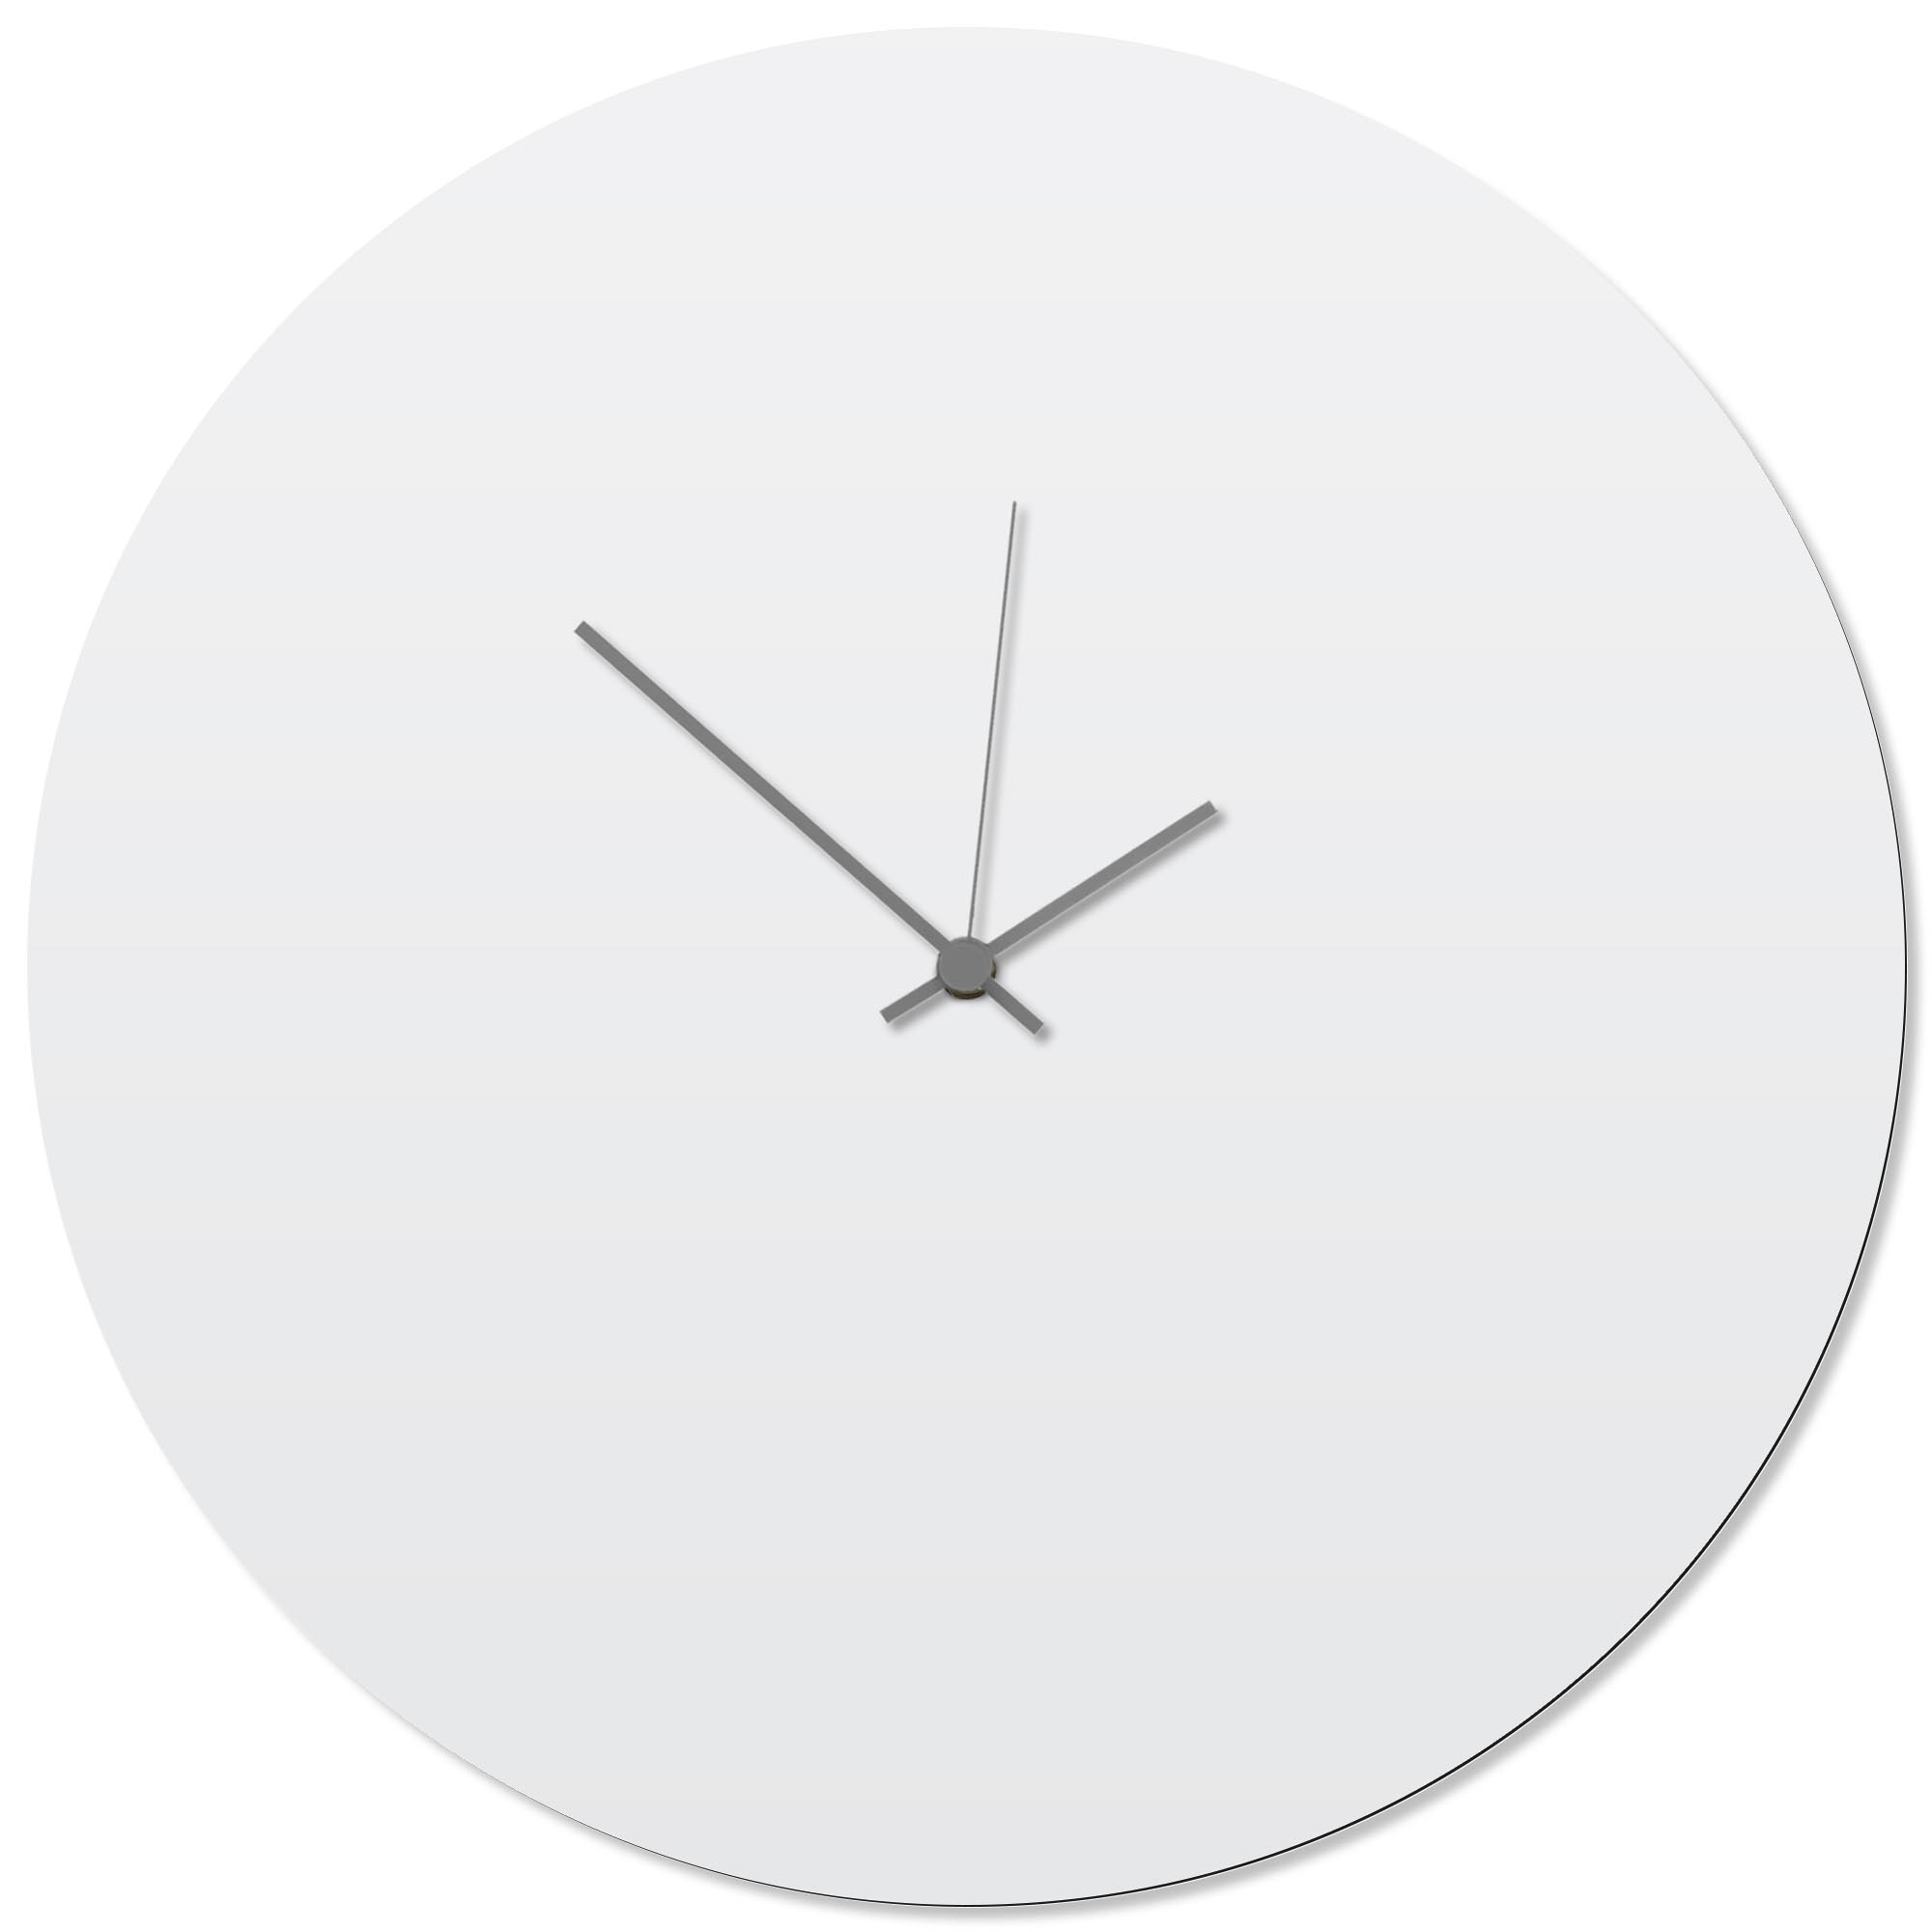 Whiteout Grey Circle Clock Large 23x23in. Aluminum Polymetal